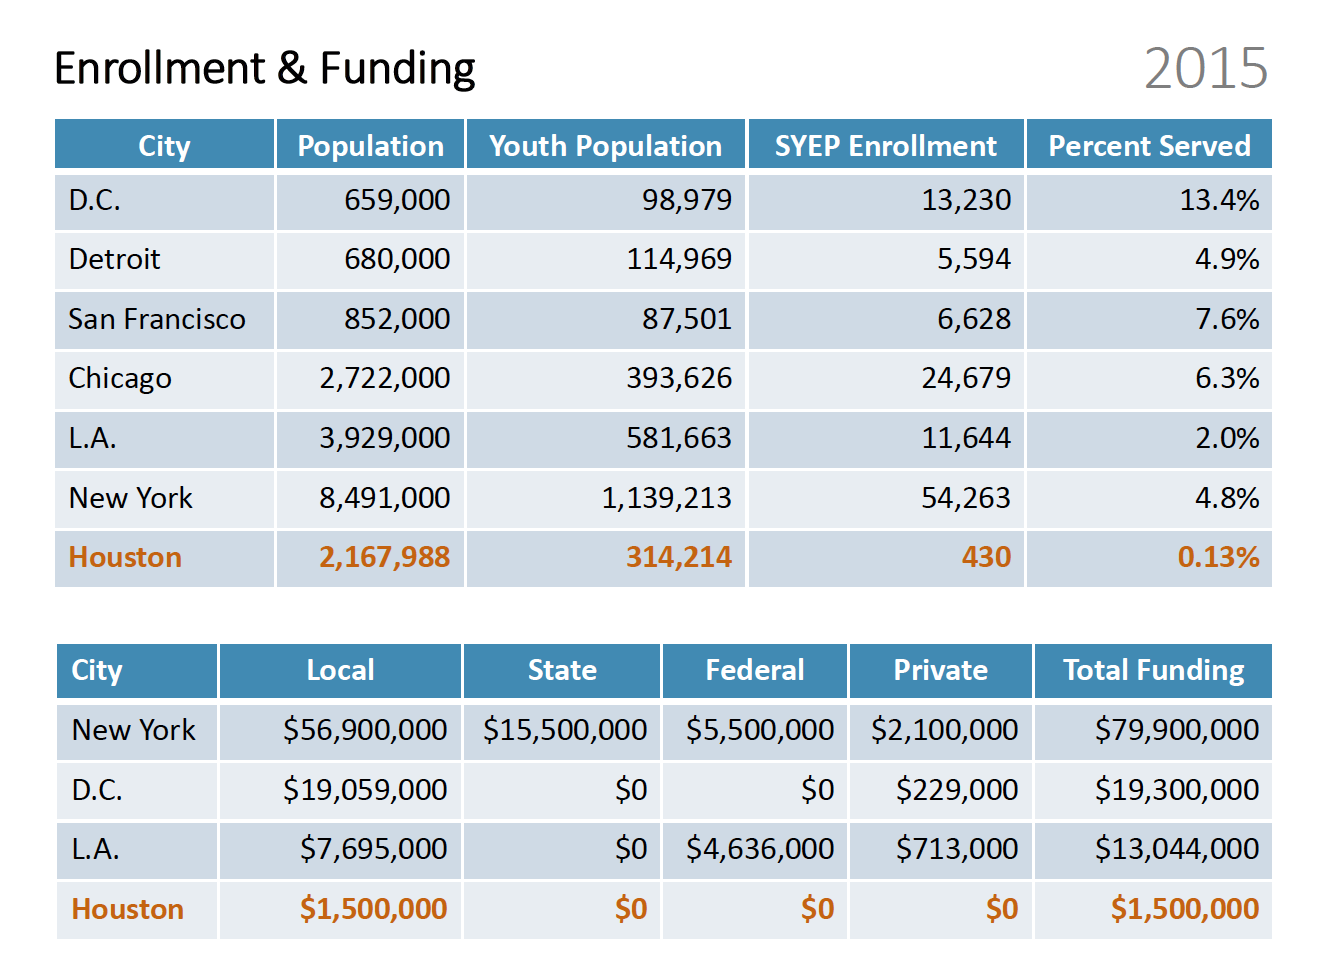 Enrollment and funding data sets